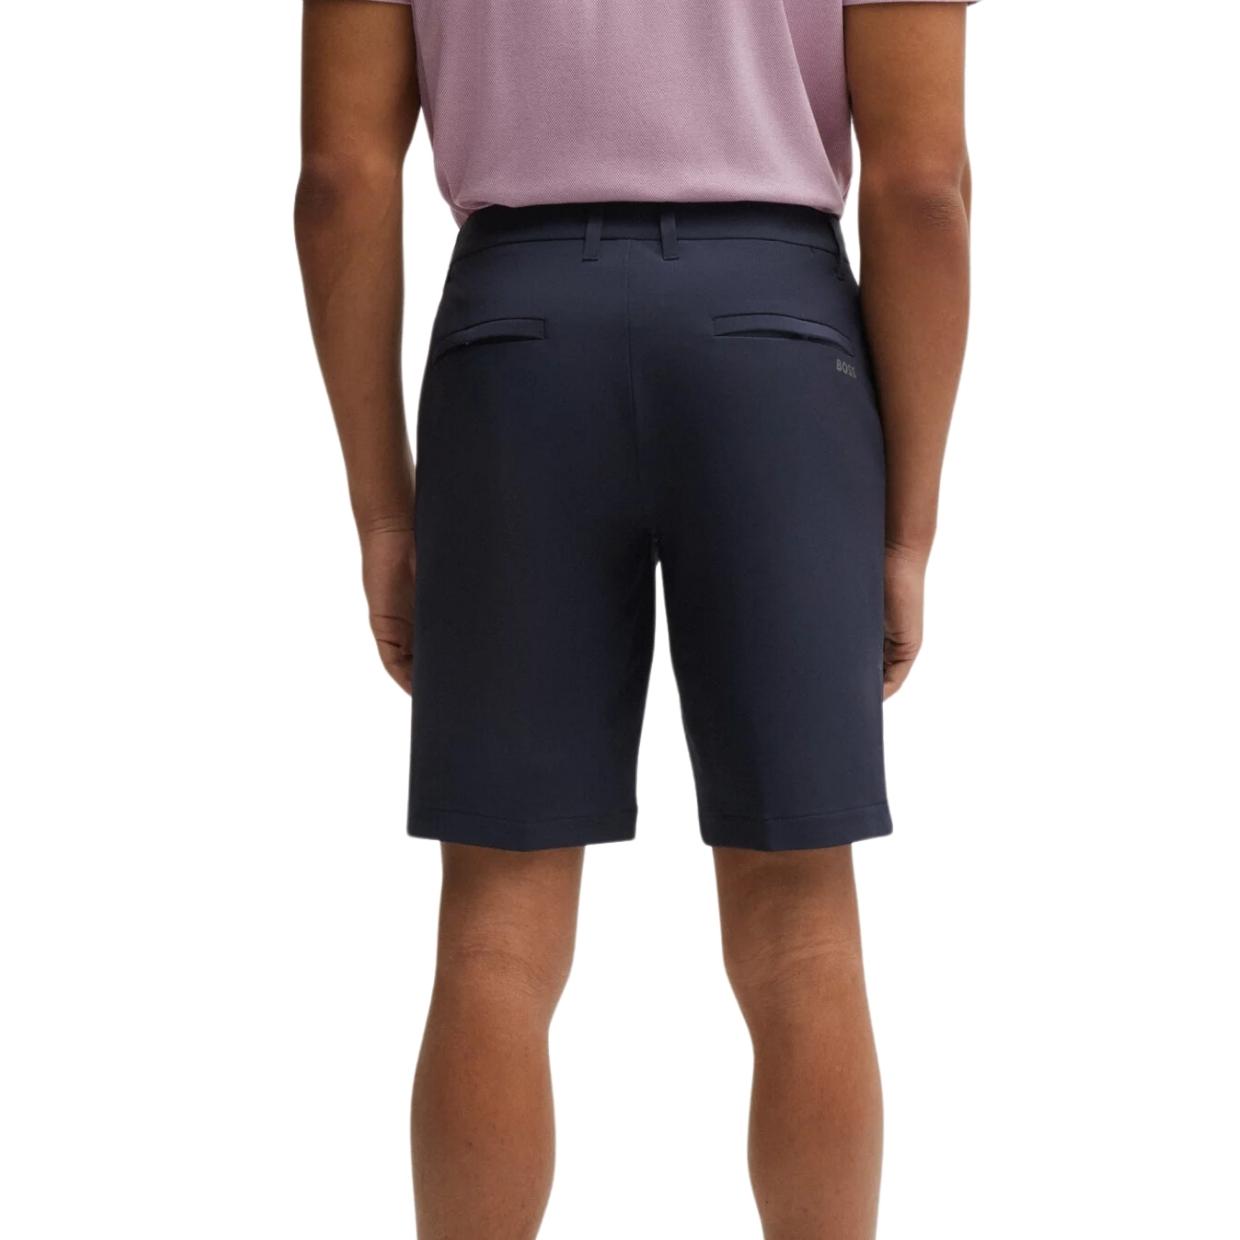 BOSS S-Commuter Slim Fit Navy Shorts